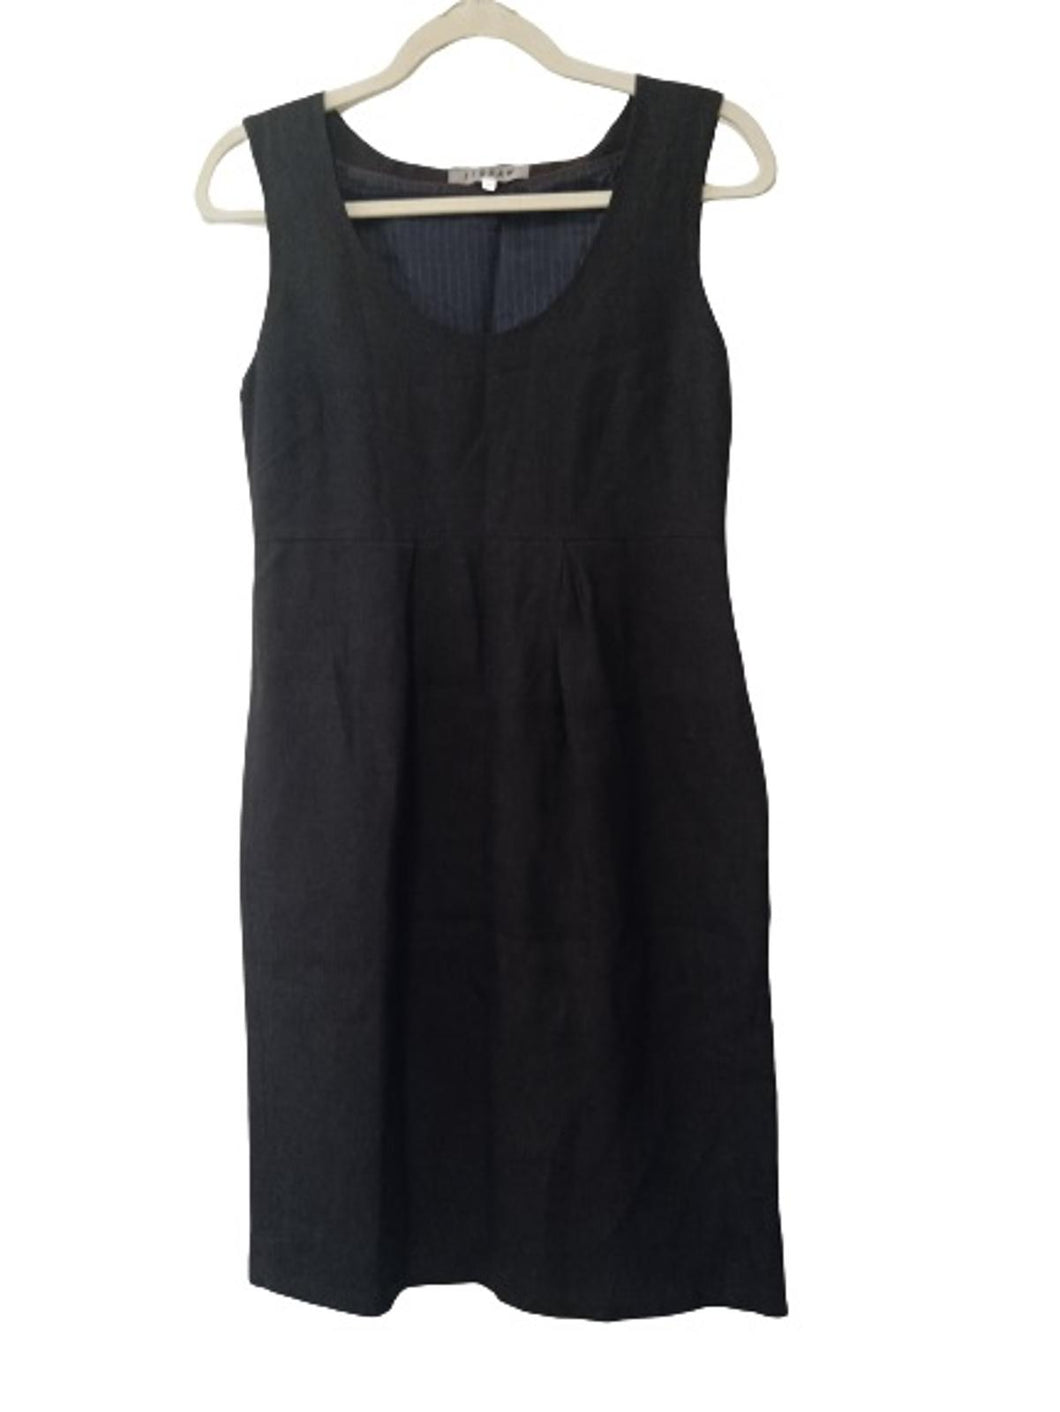 JIGSAW Ladies Black Sleeveless Scoop Neck Dress Size UK10